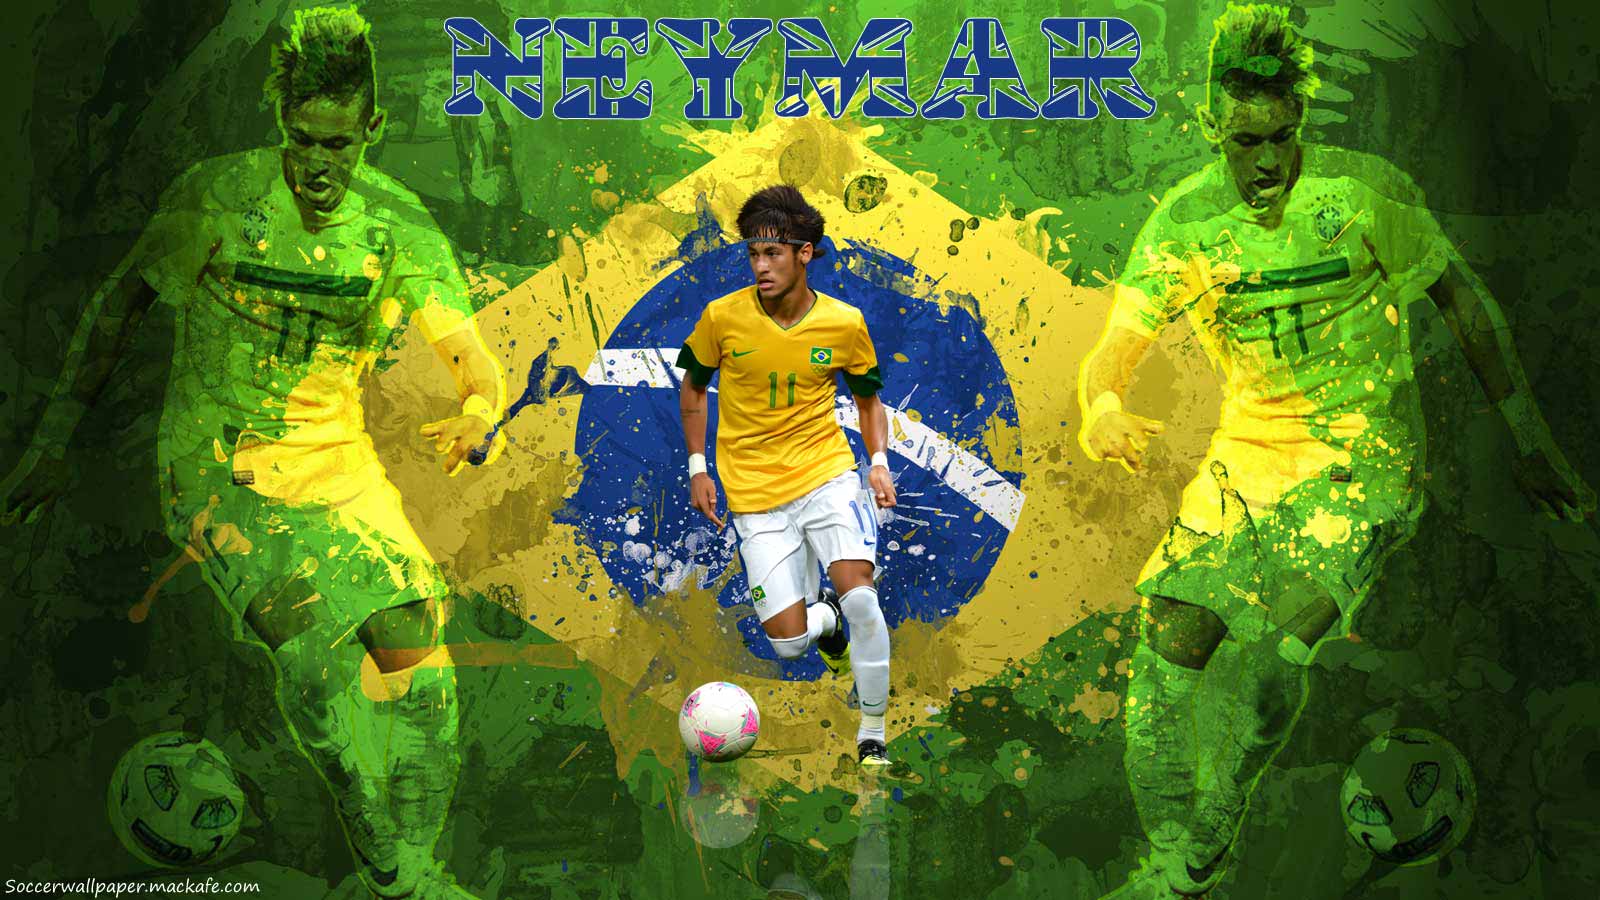 Neymar brazil 2013 wallpaper. Background HD Wallpaper for Desktop